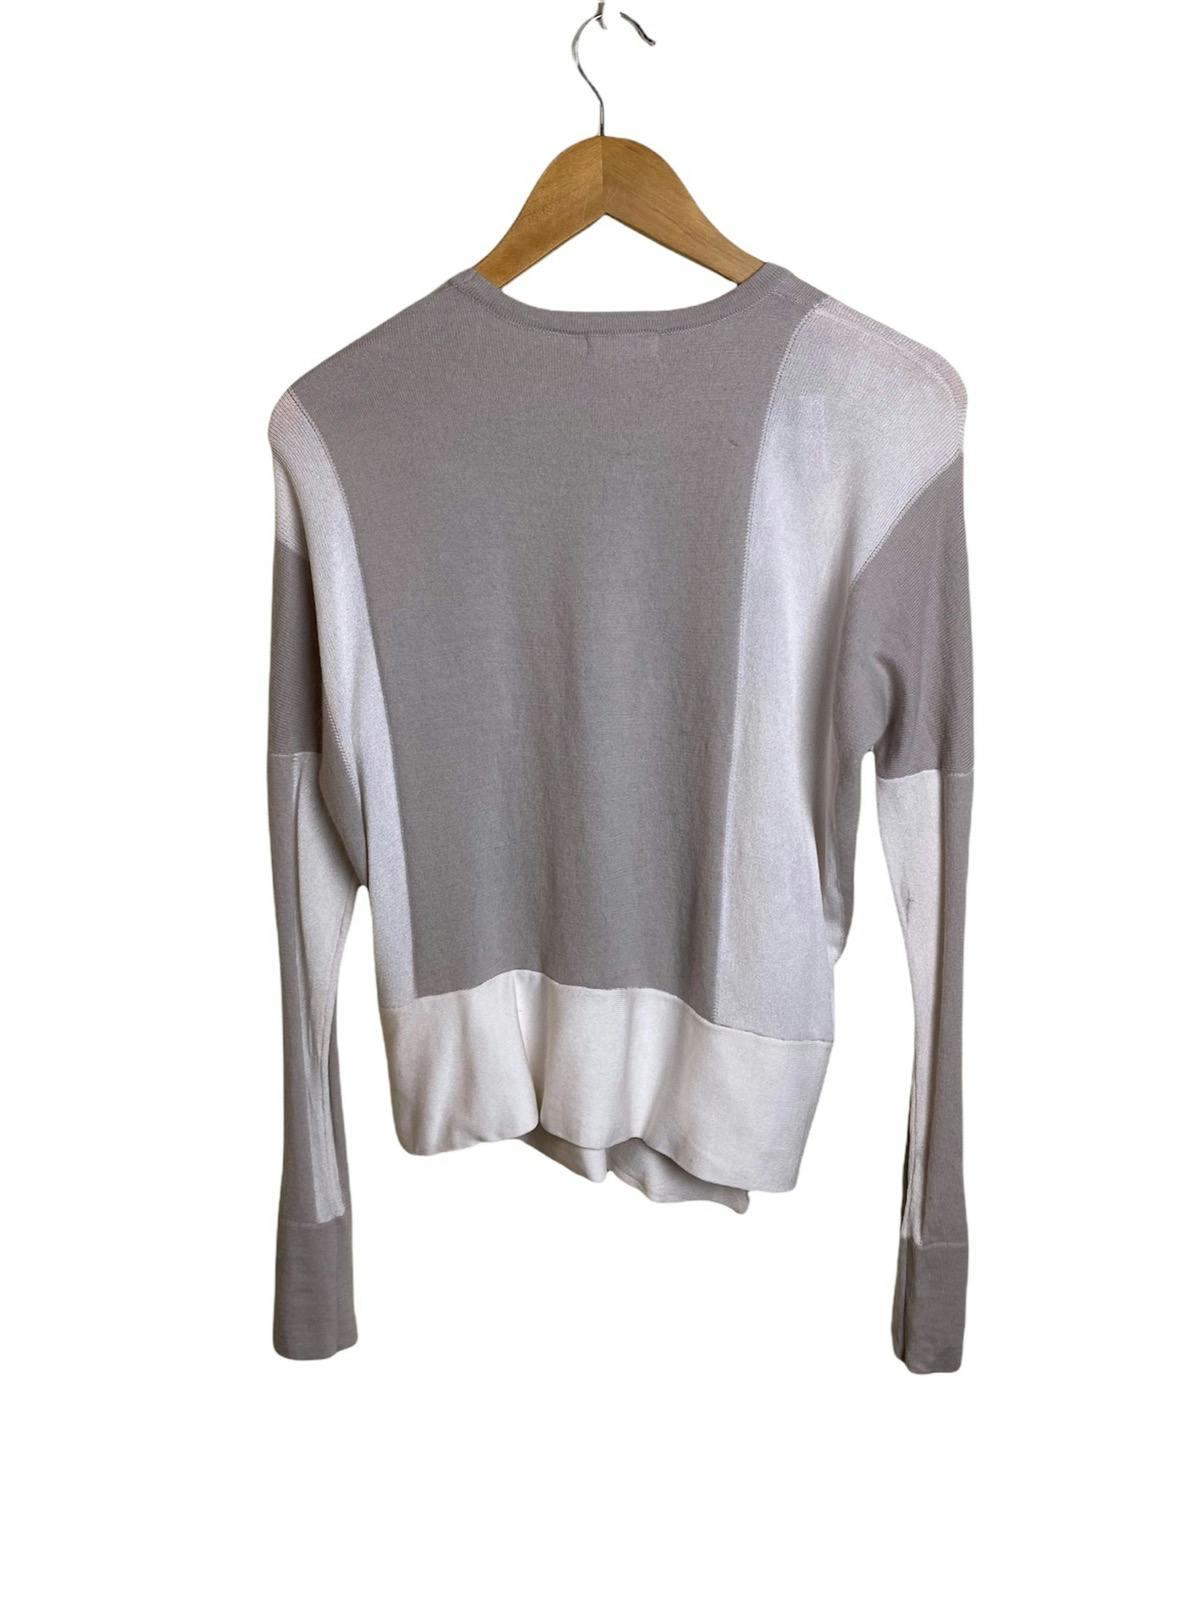 Helmut Lang Sweater Alpaca Viscose Blend Fall 2013 - 5